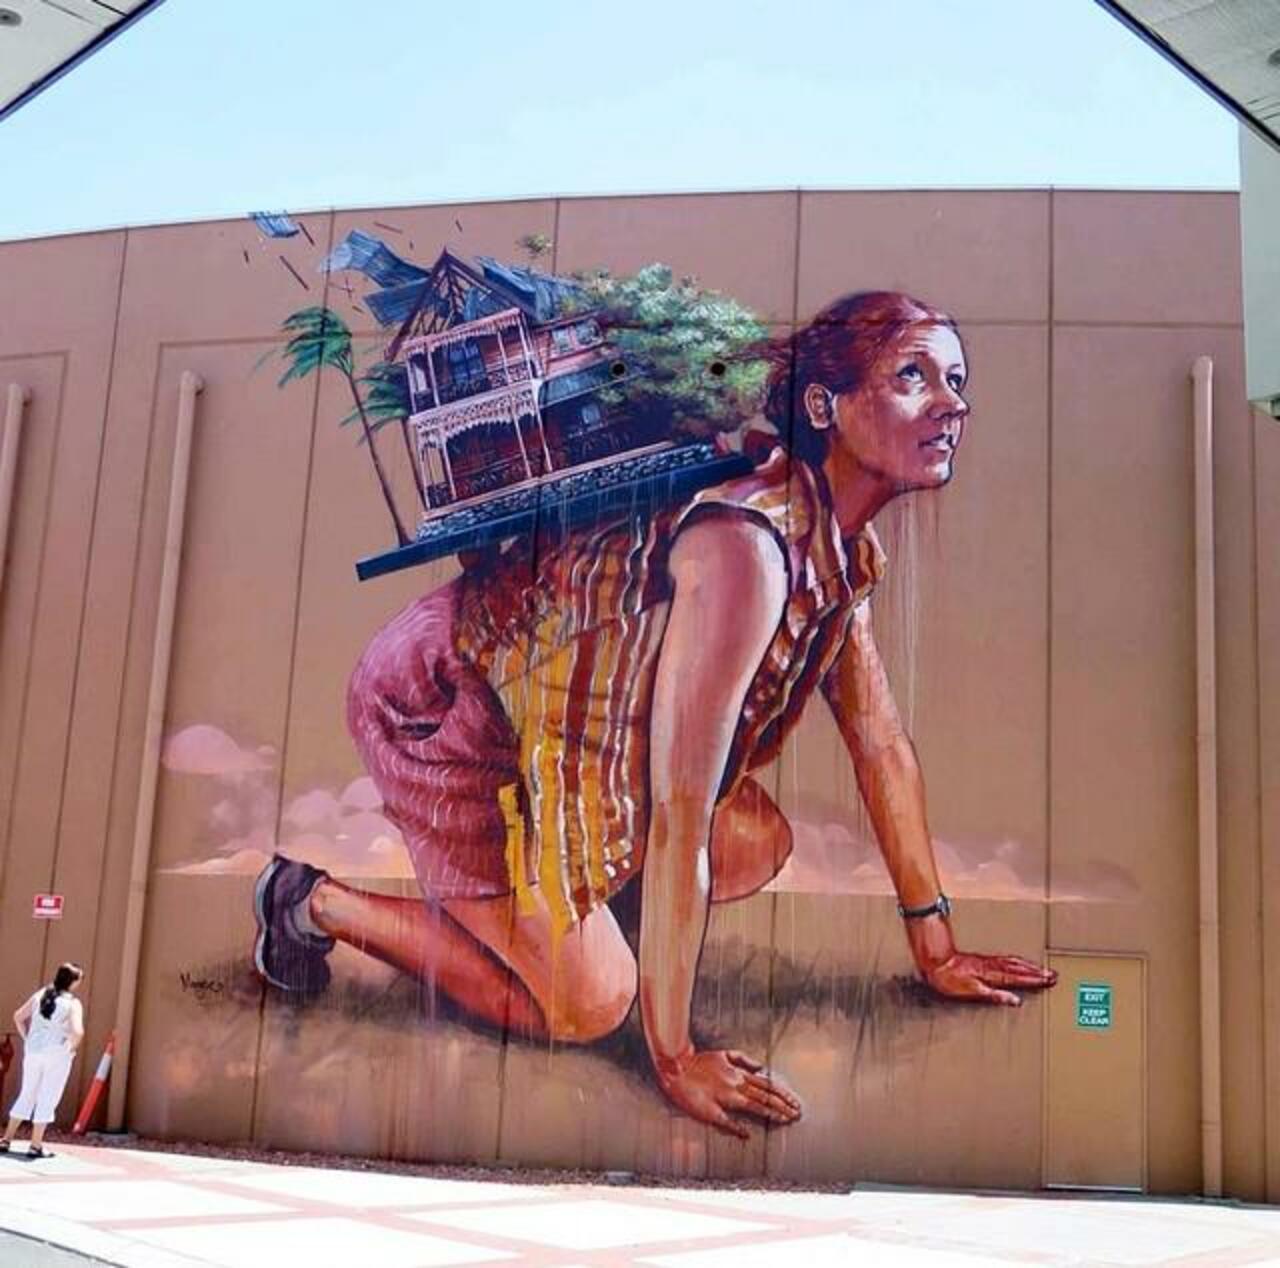 Latest Fintan Magee massive Street Art piece in Bunbury, Western Australia 

#art #graffiti #mural #streetart http://t.co/2BEiKVe4xd